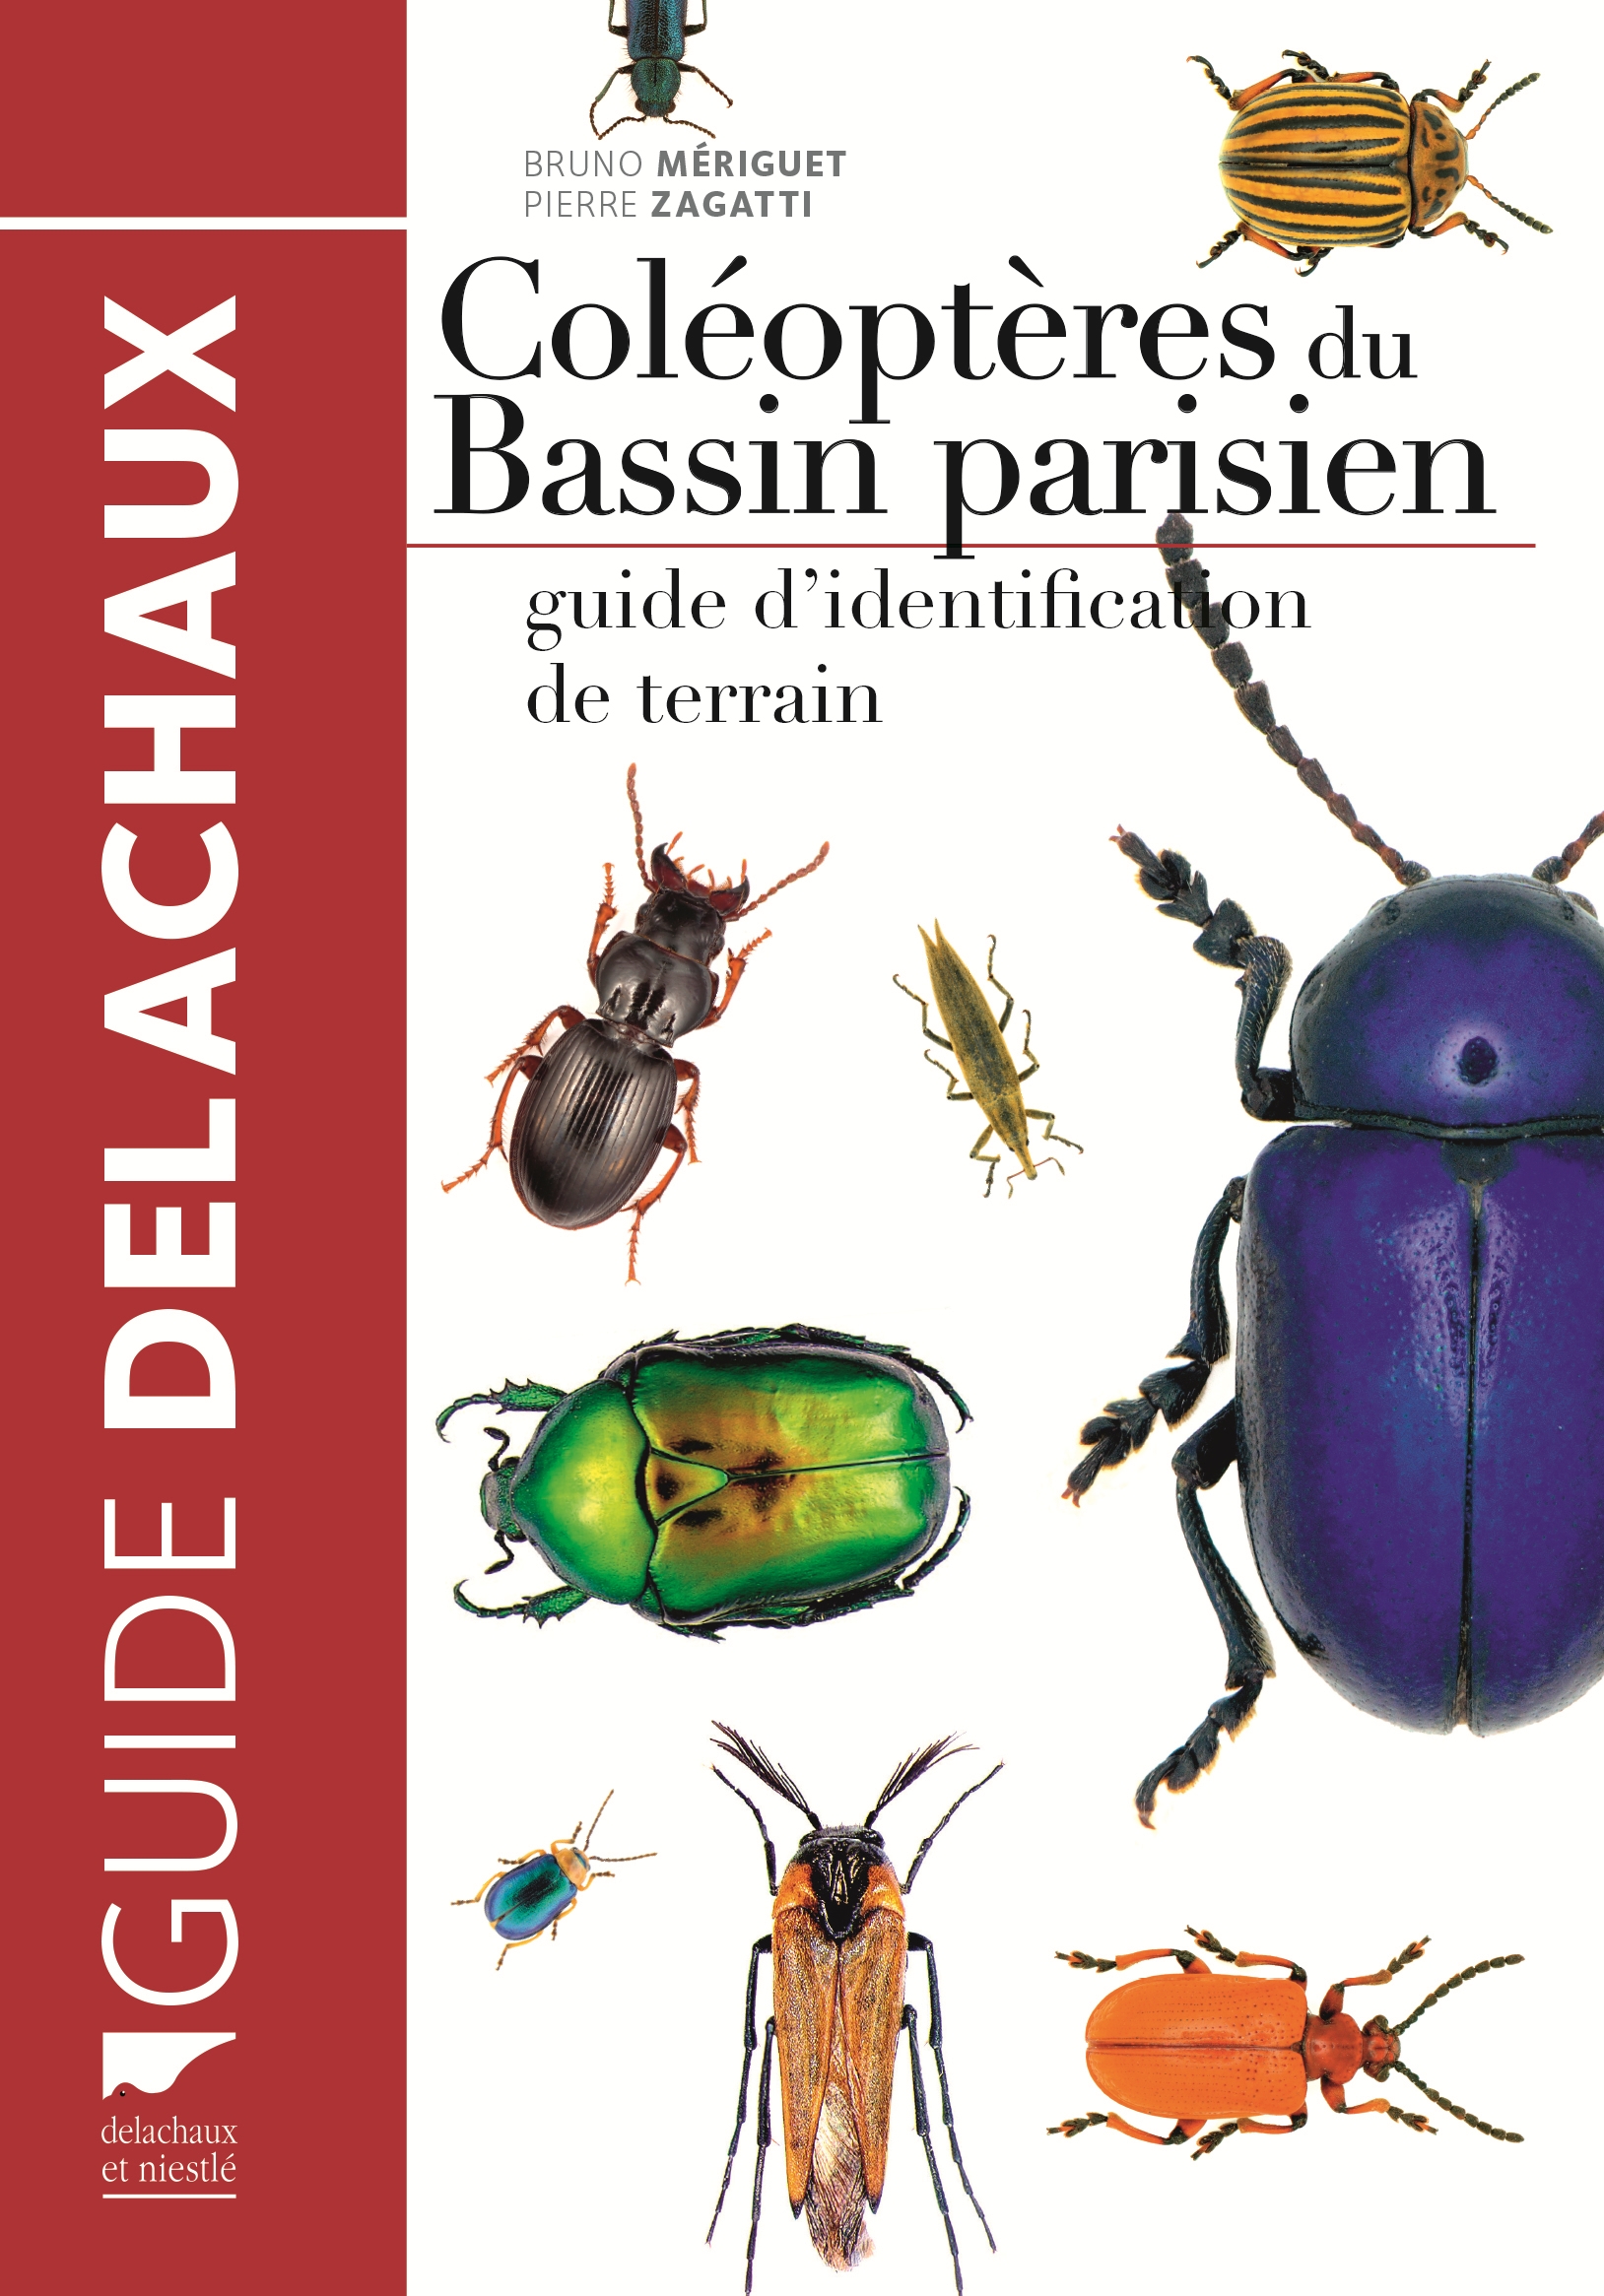 The beetles of the Paris Basin: interview of Bruno Mériguet